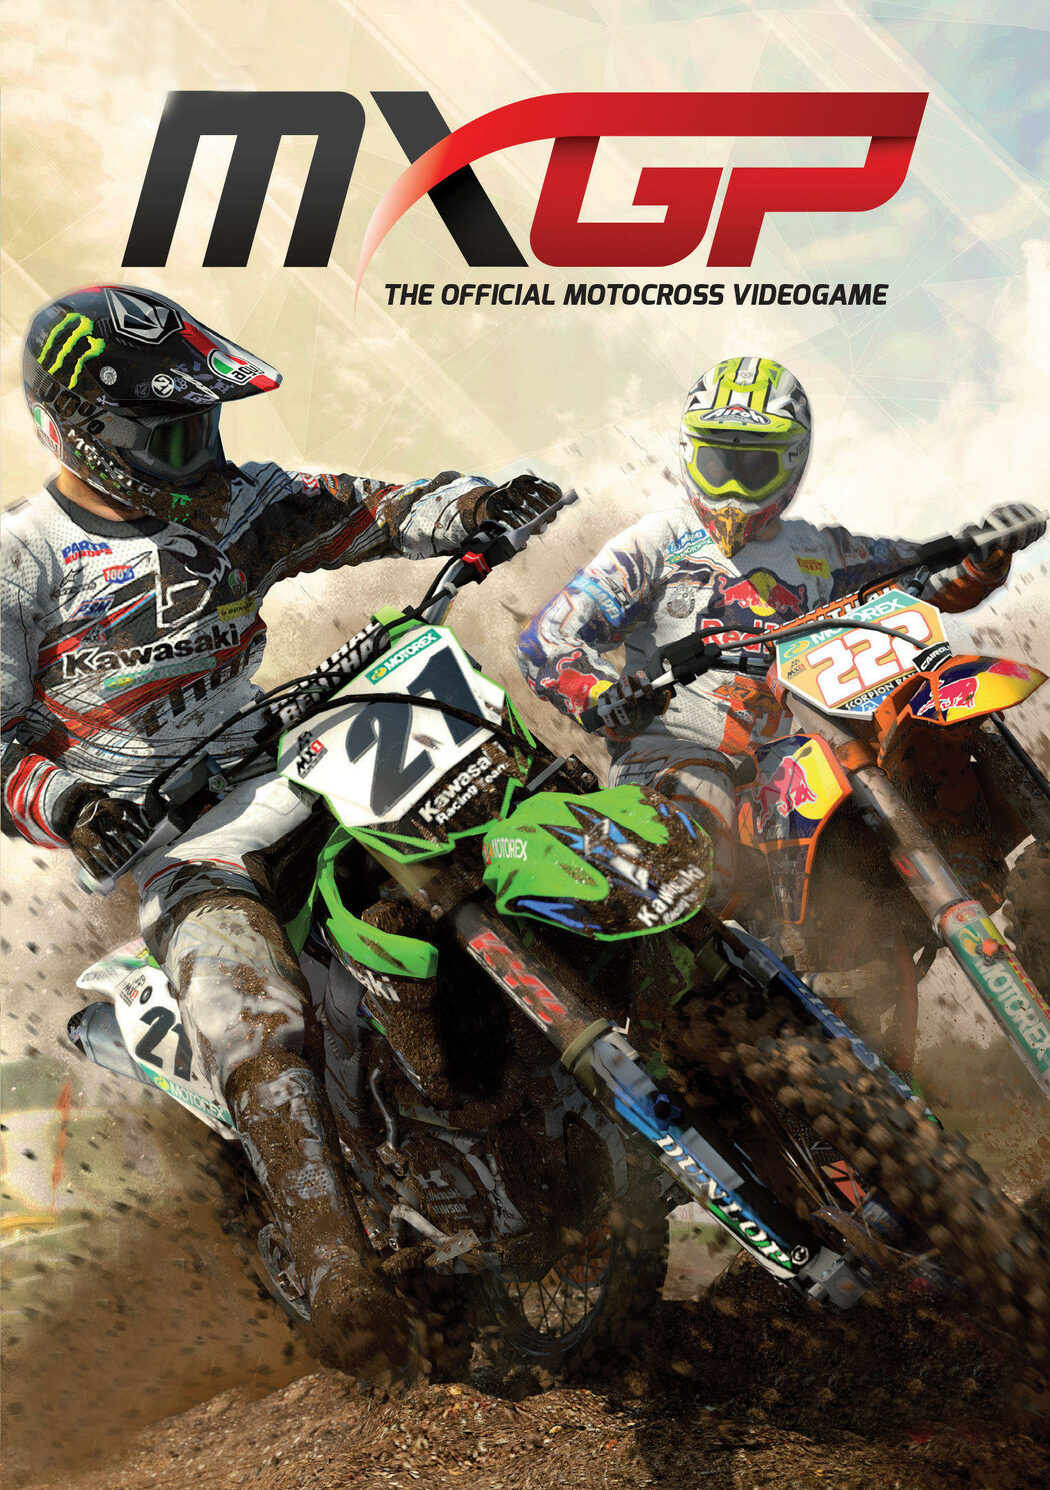 Mxgp3 - the official motocross videogame